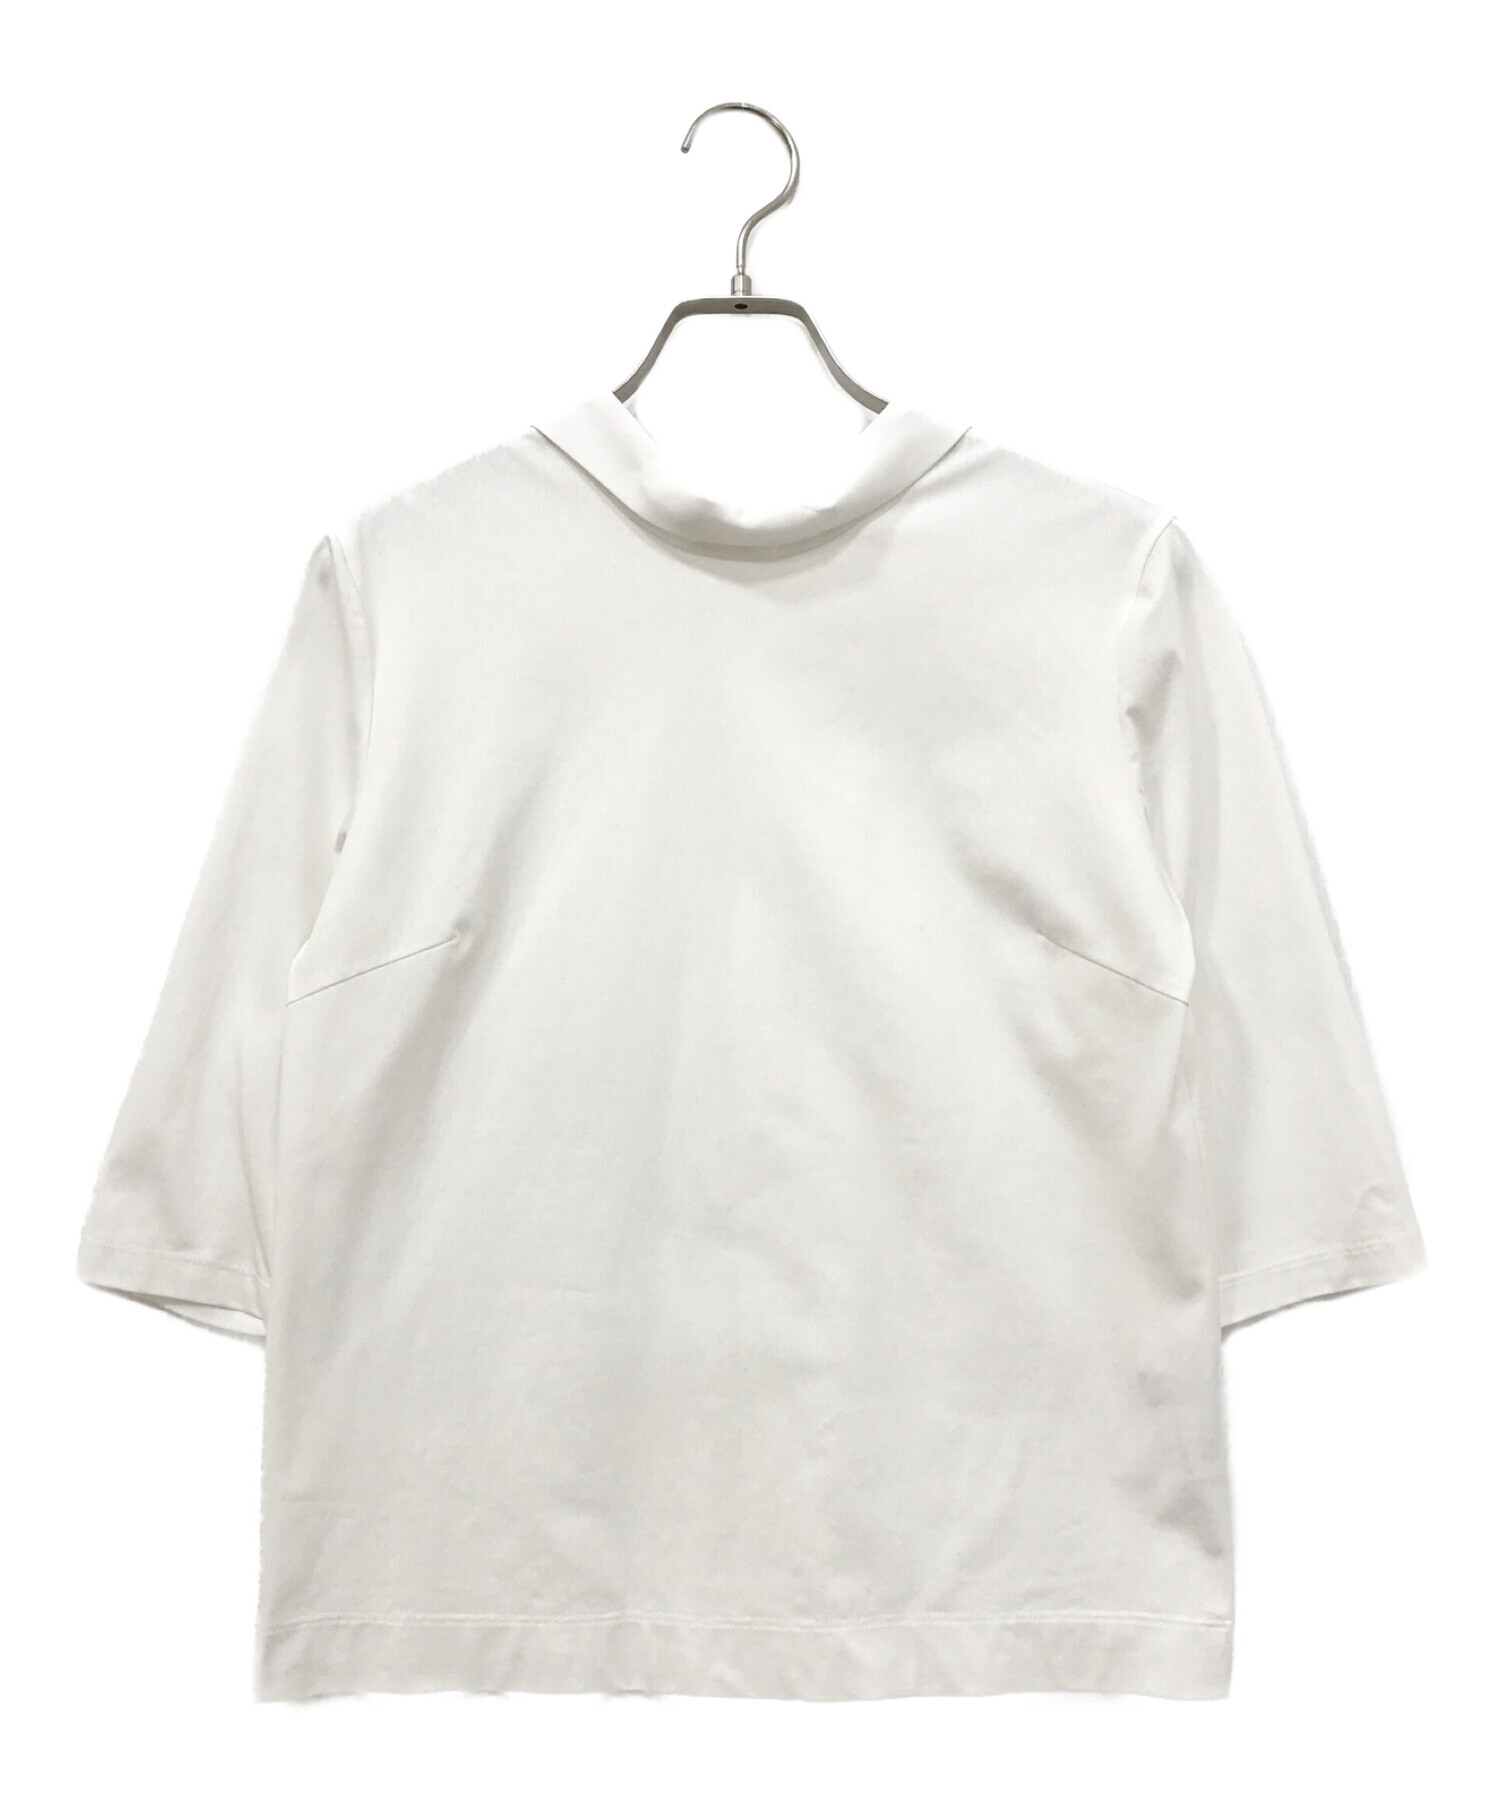 SHE TOKYO (シートーキョー) Monica blouse ホワイト サイズ:1